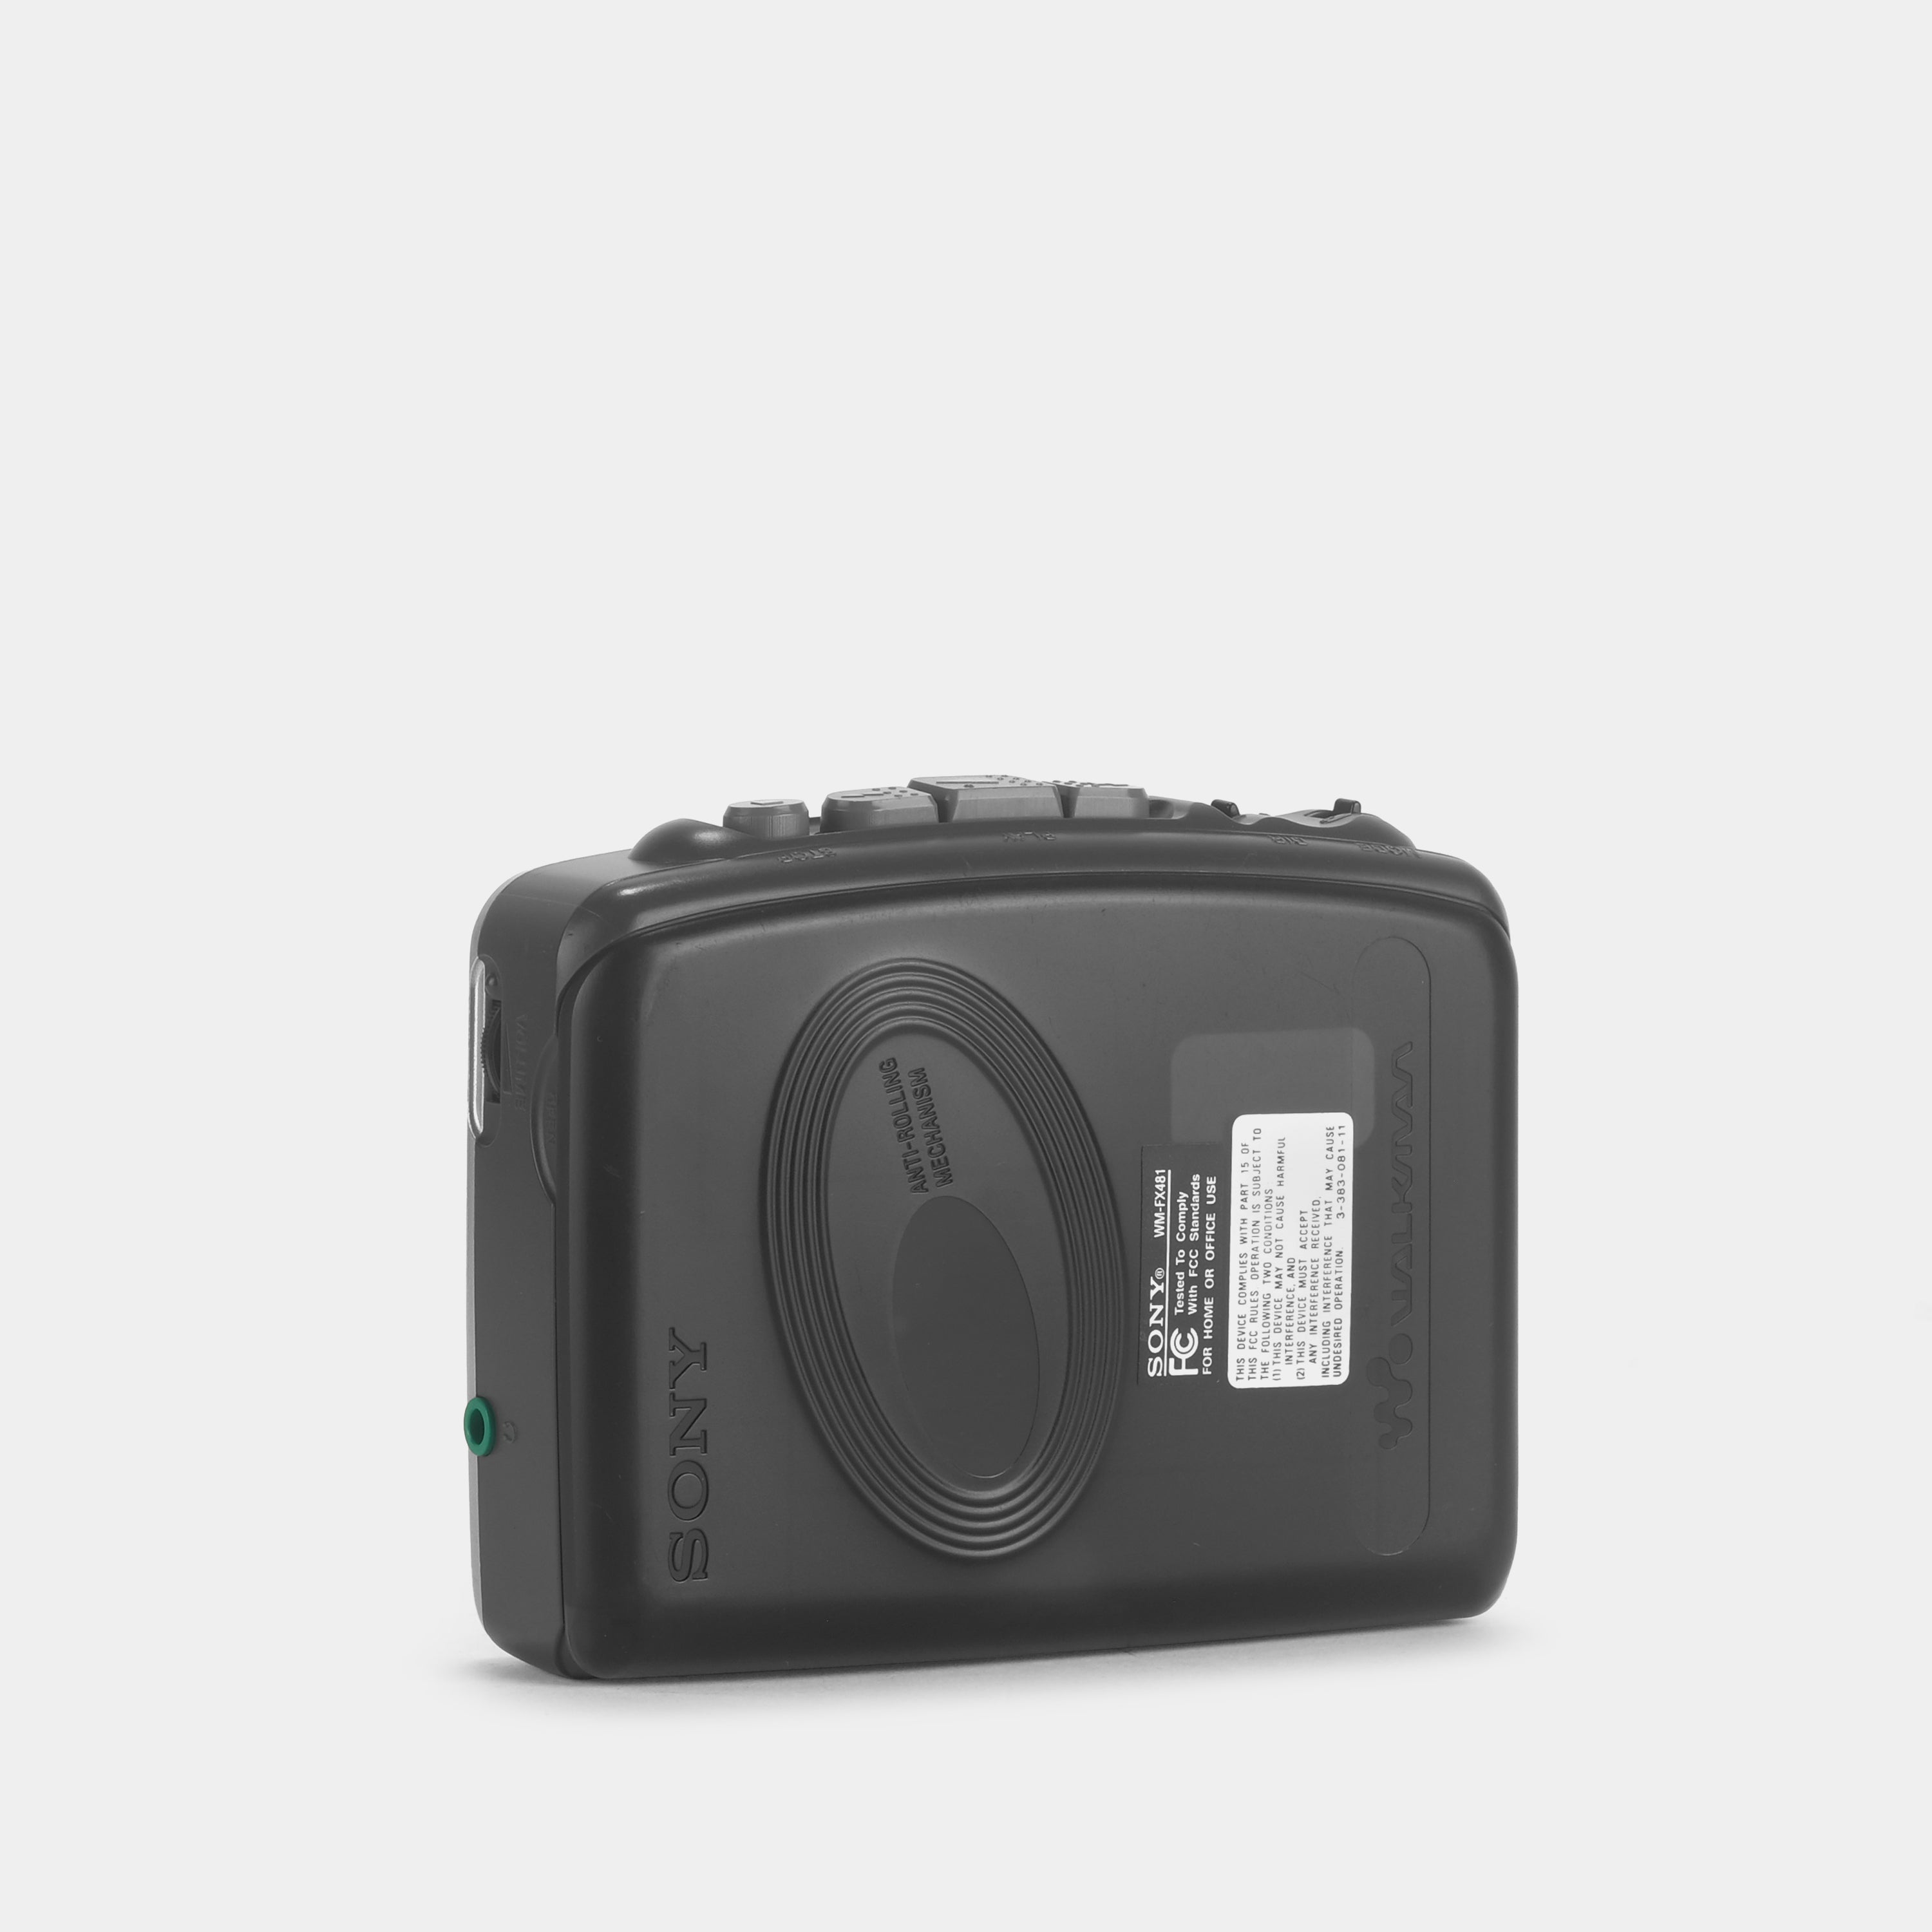 Sony Walkman WM-FX481 AM/FM Portable Cassette Player